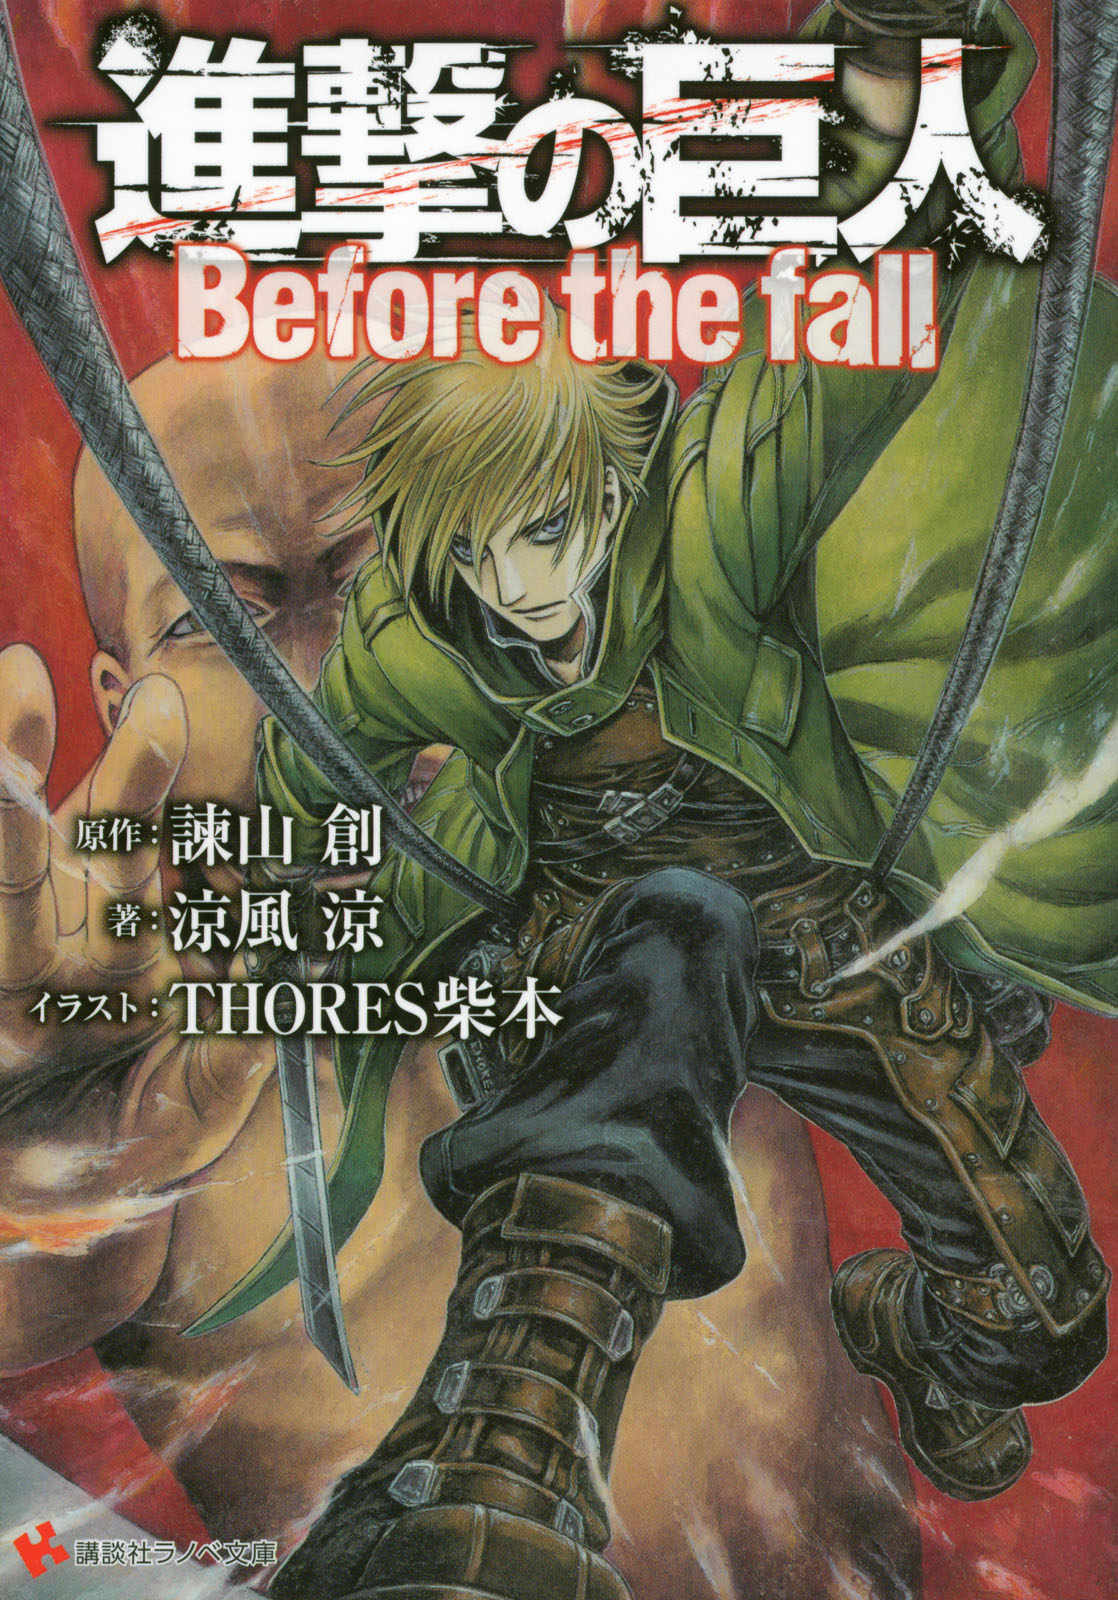 Deutsch NEUWARE Carlsen Manga Attack on Titan: Before the Fall 5 